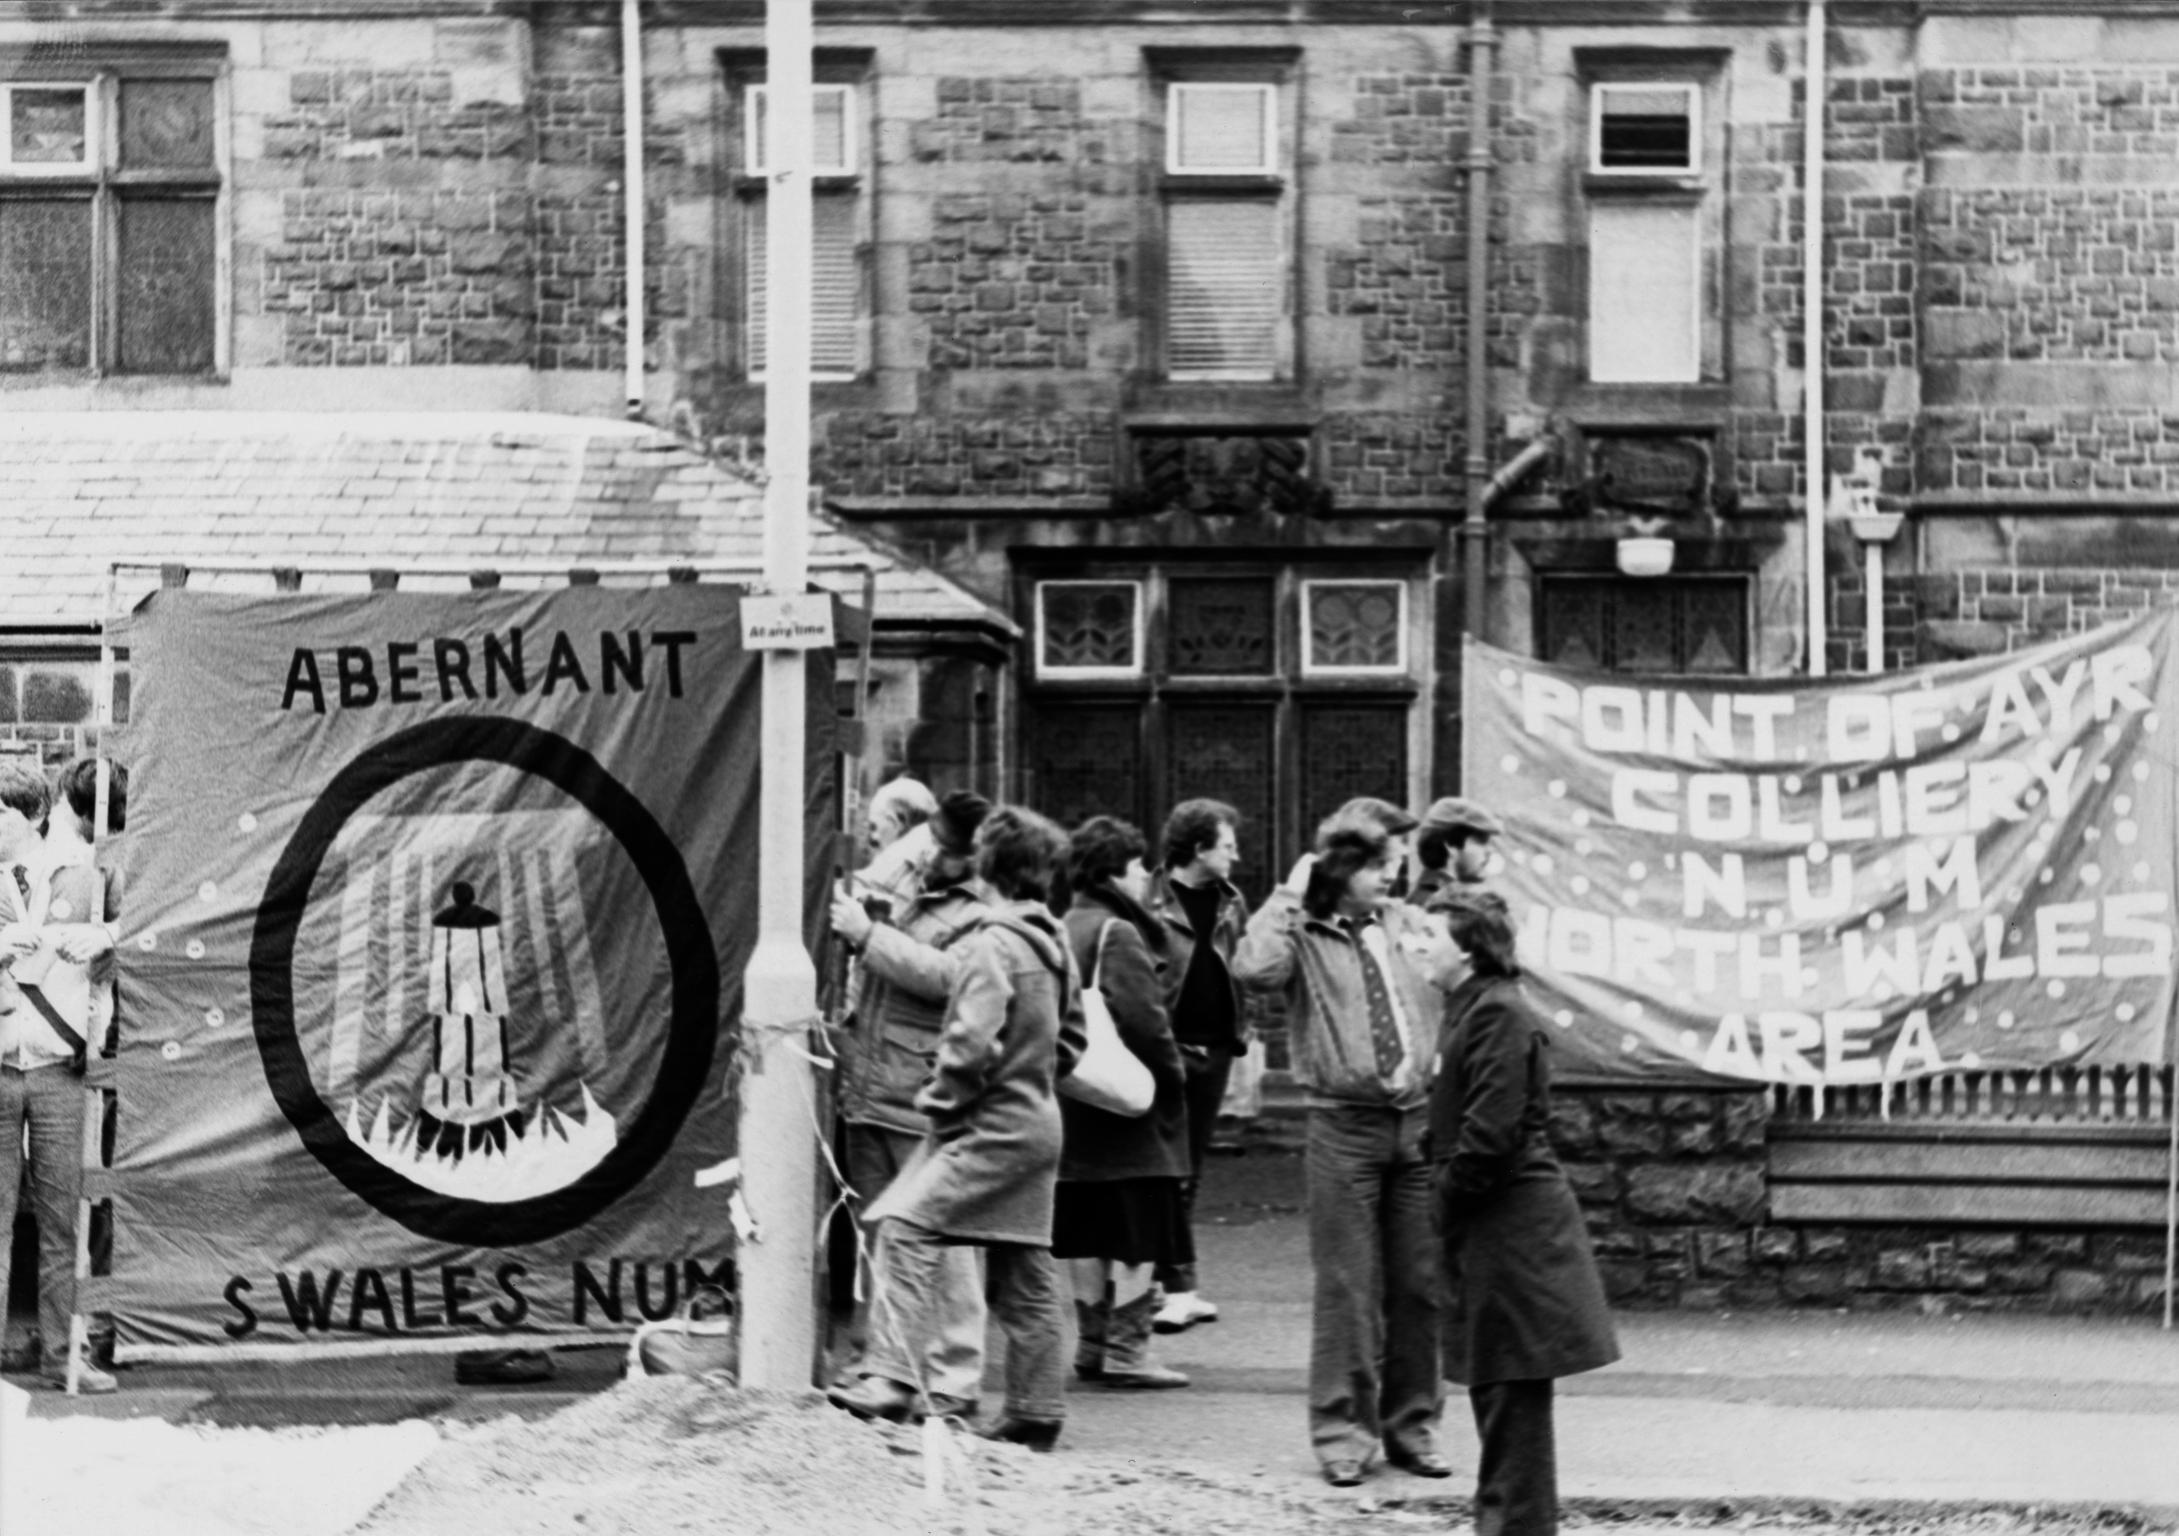 Miners' strike 1984-85, photograph